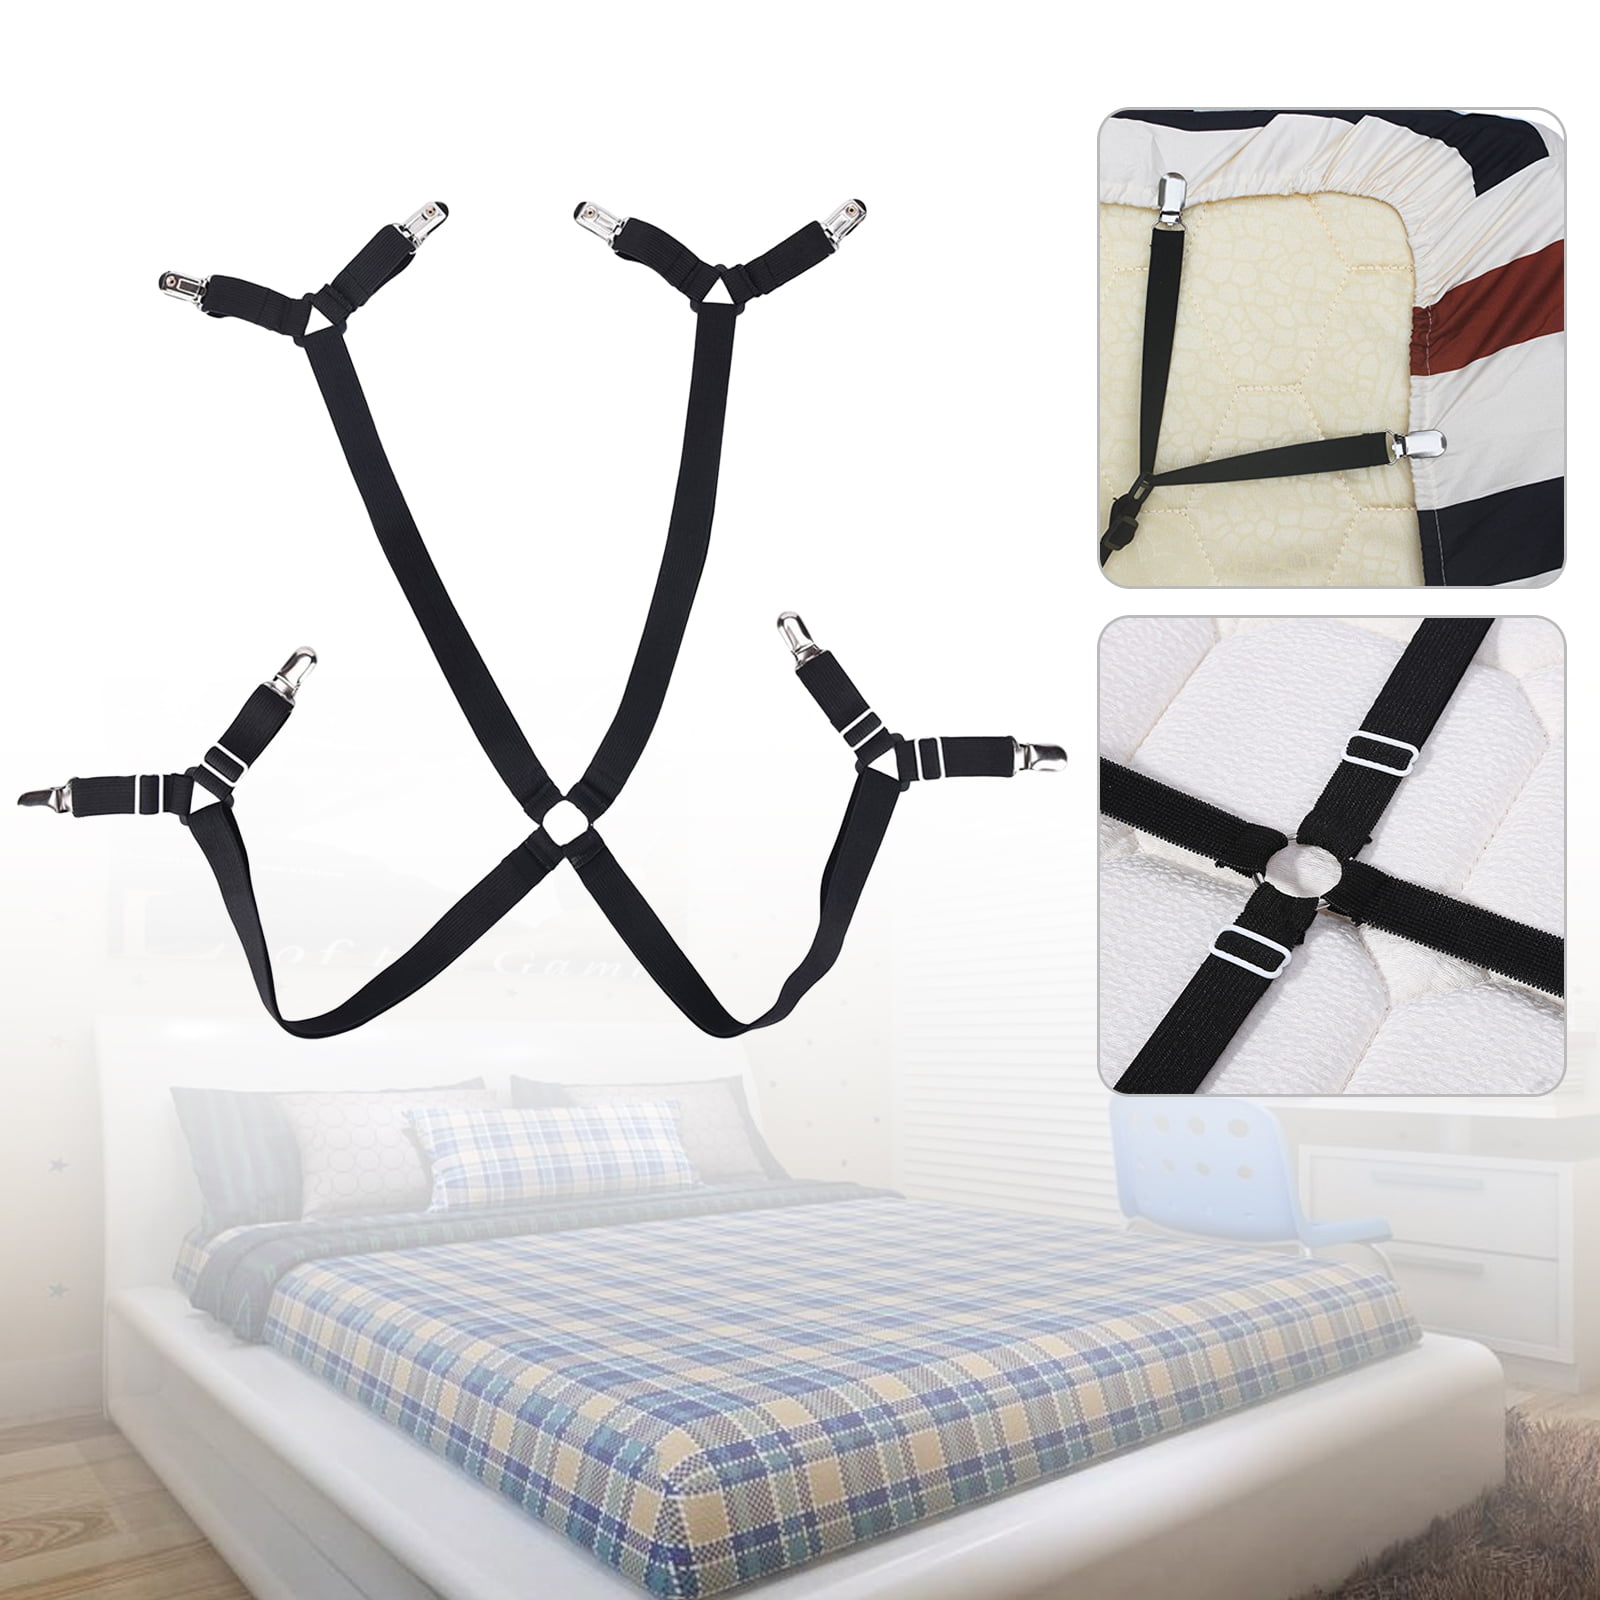 Crisscross Bed Fitted Sheet Straps Suspenders Gripper Holder Fastener Adjustable 